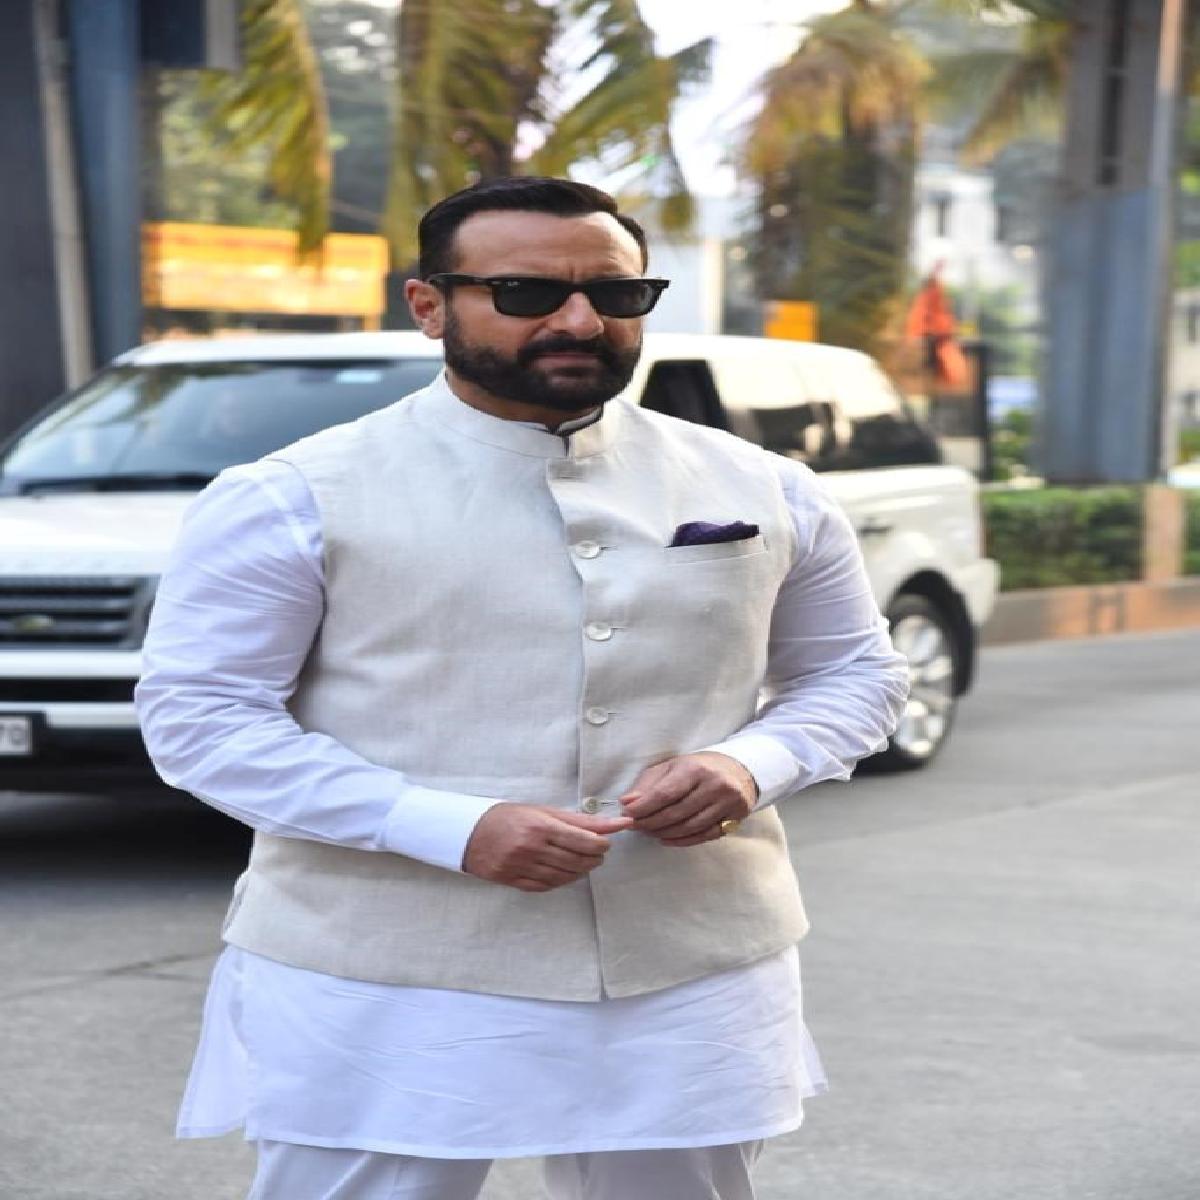 House Of Pataudi, Aims To Make Elegant Clothing Affordable Says Saif Ali Khan